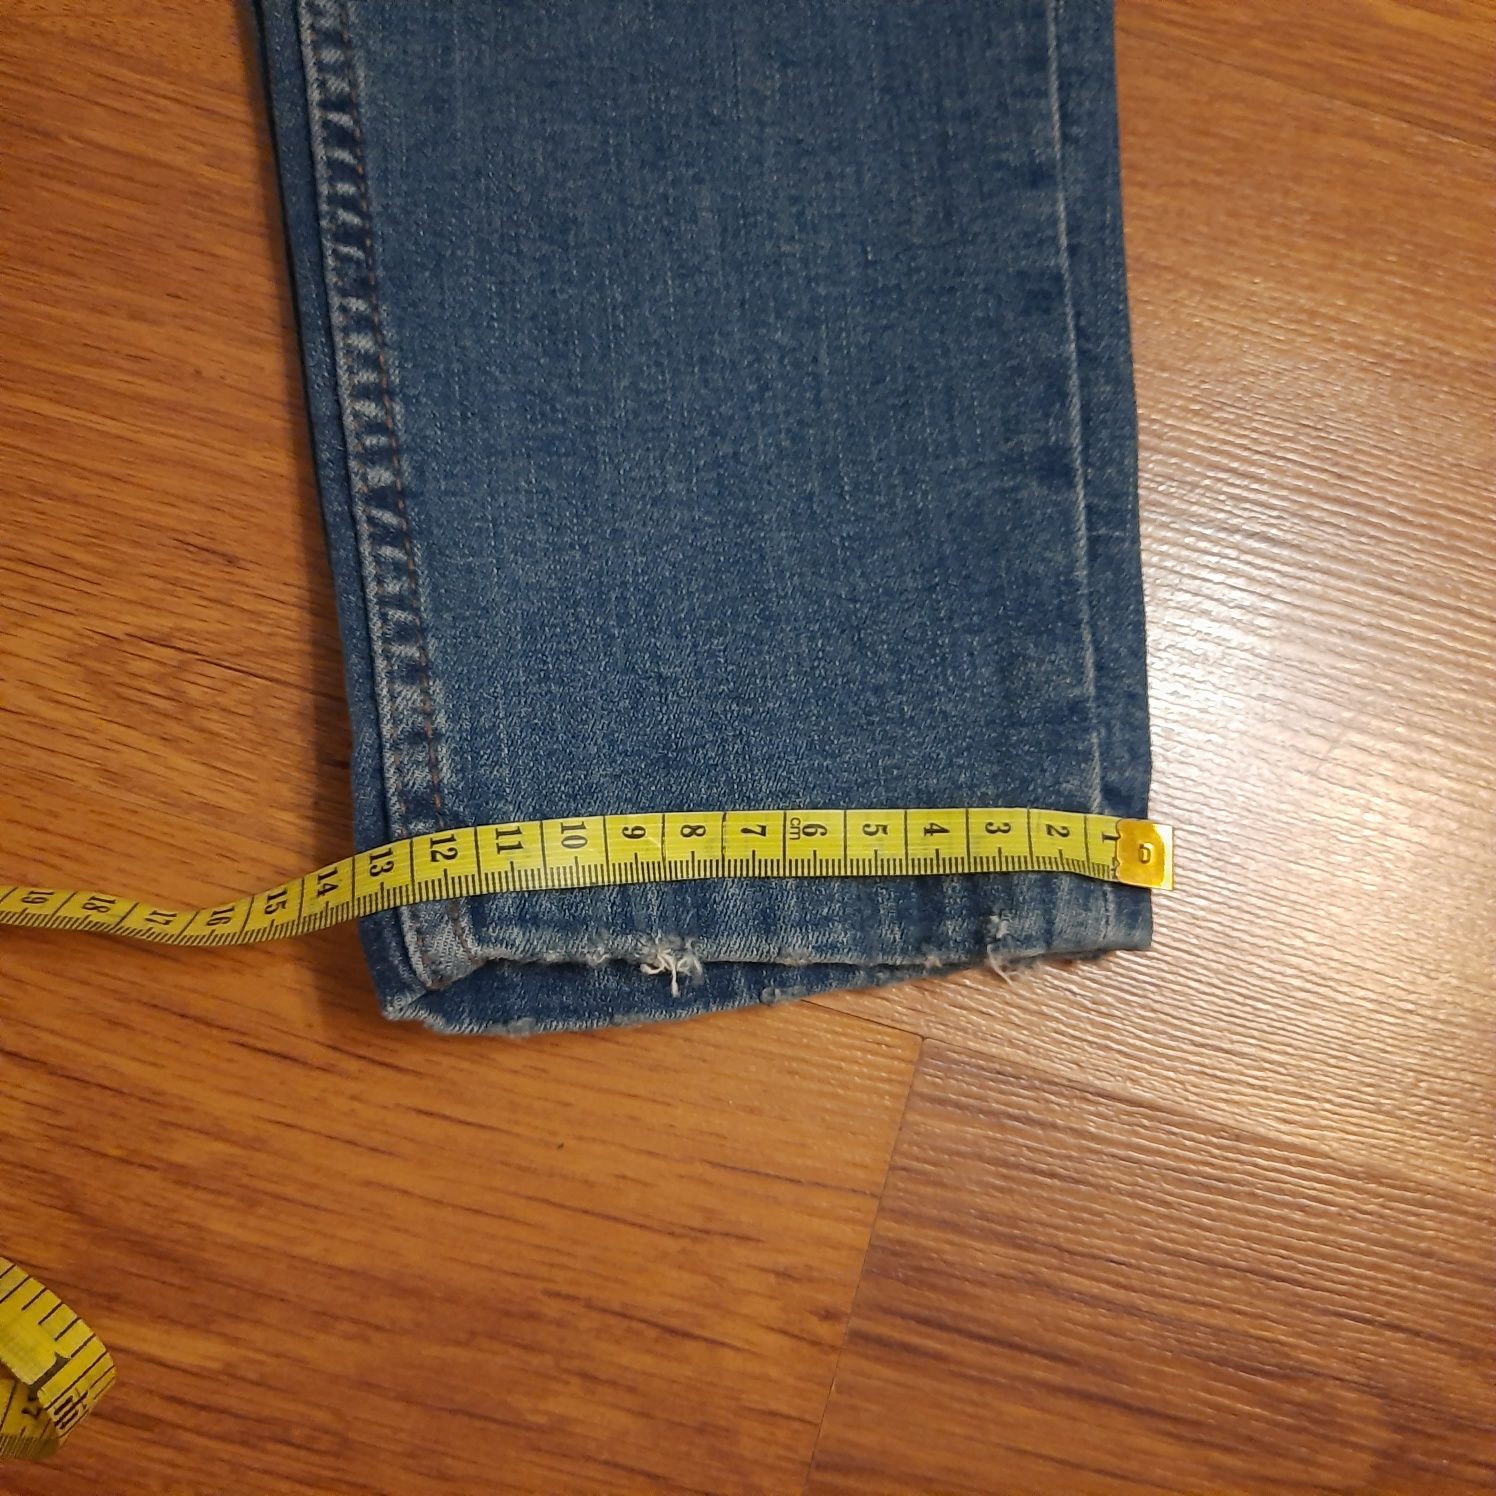 Nowe jeansy damskie Reserved 38